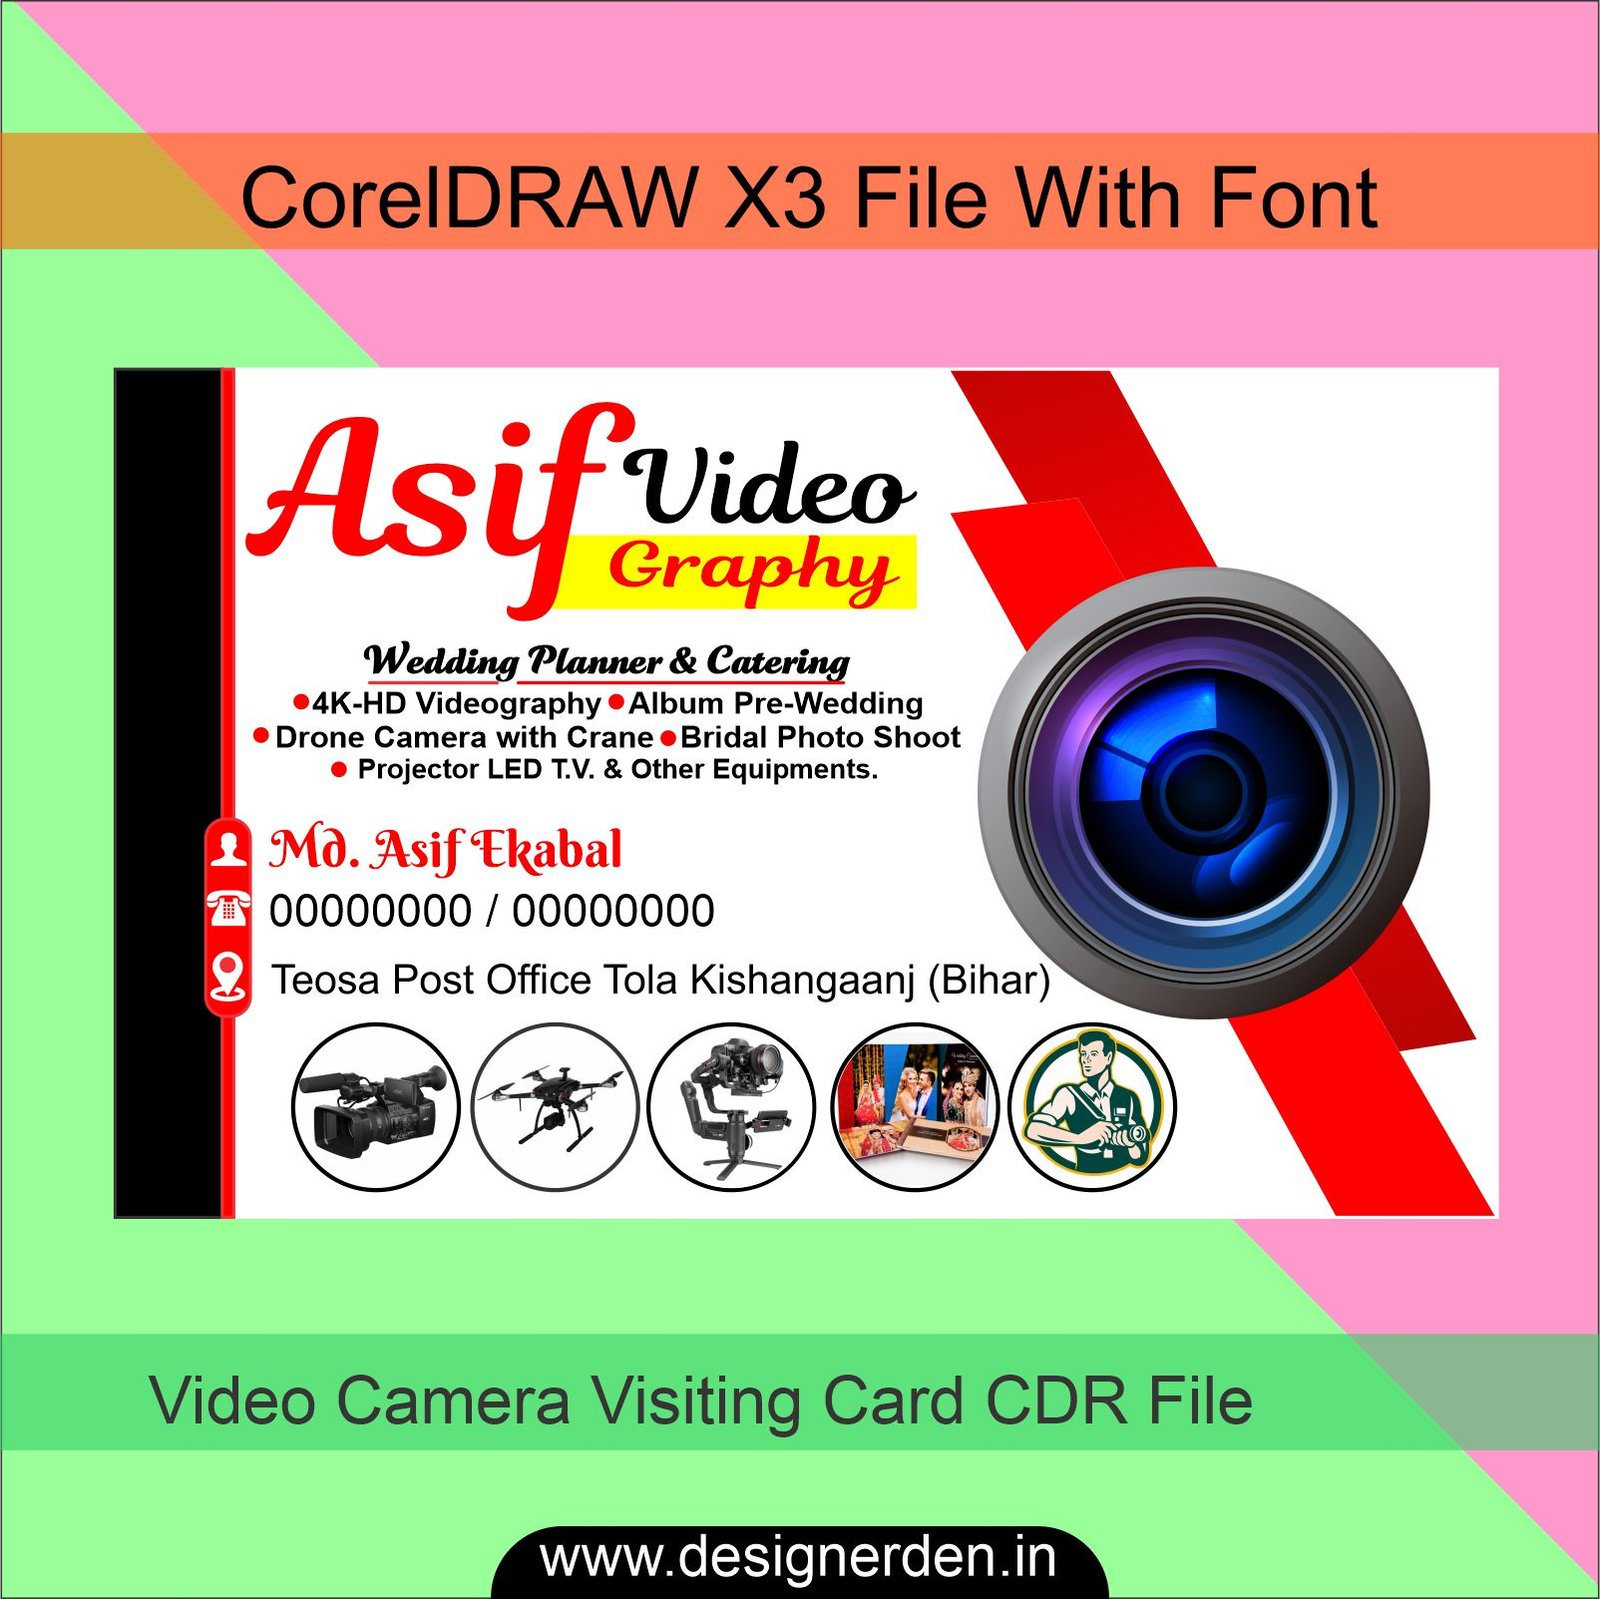 Video Camera Visiting Card CDR File - Designerden.in